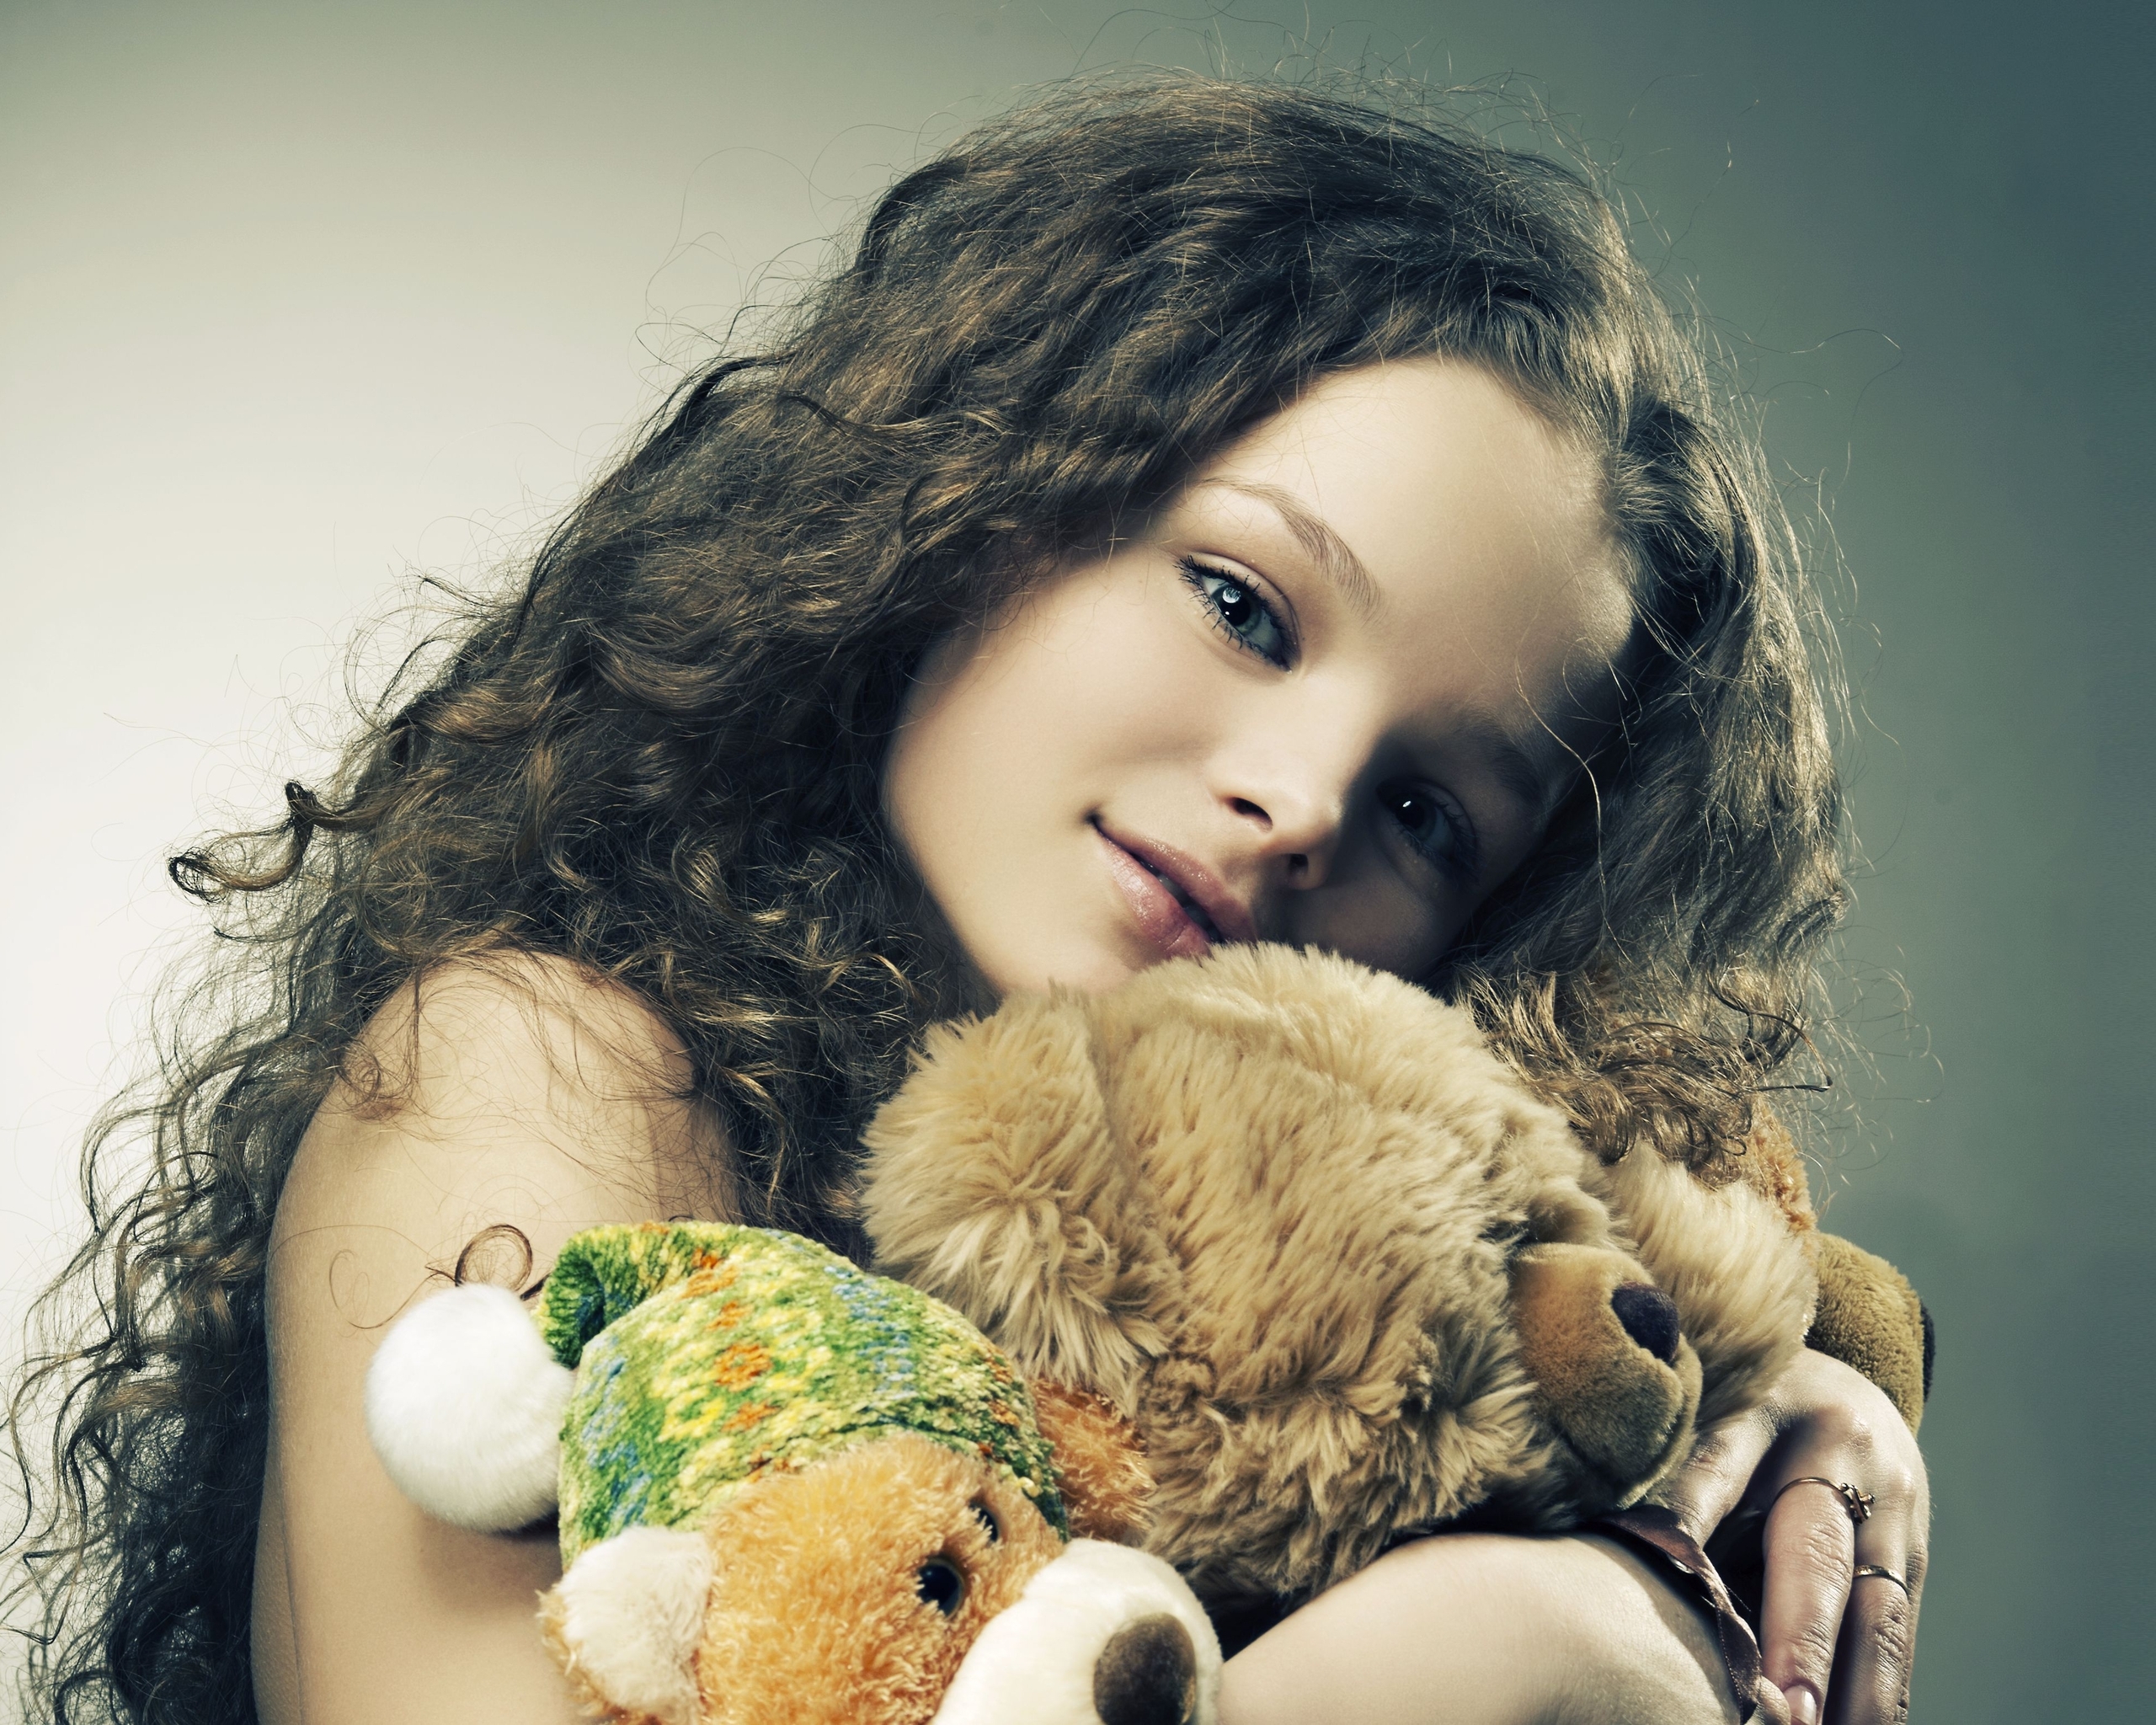 Картинка: Девочка, игрушки, взгляд, улыбка, волосы, кудри, мишка